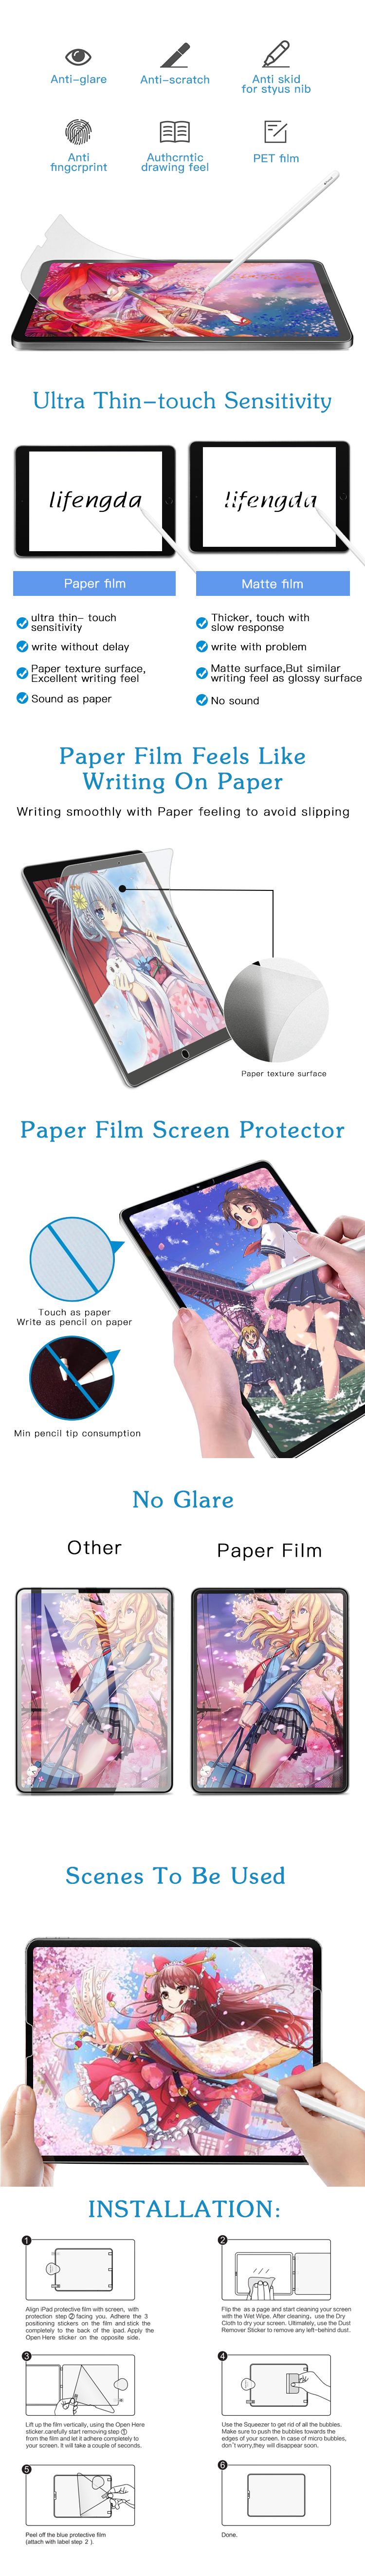 Amazon hot like paper feeling like for iPad Pro 12.9 2018-2020 tablet screen protector